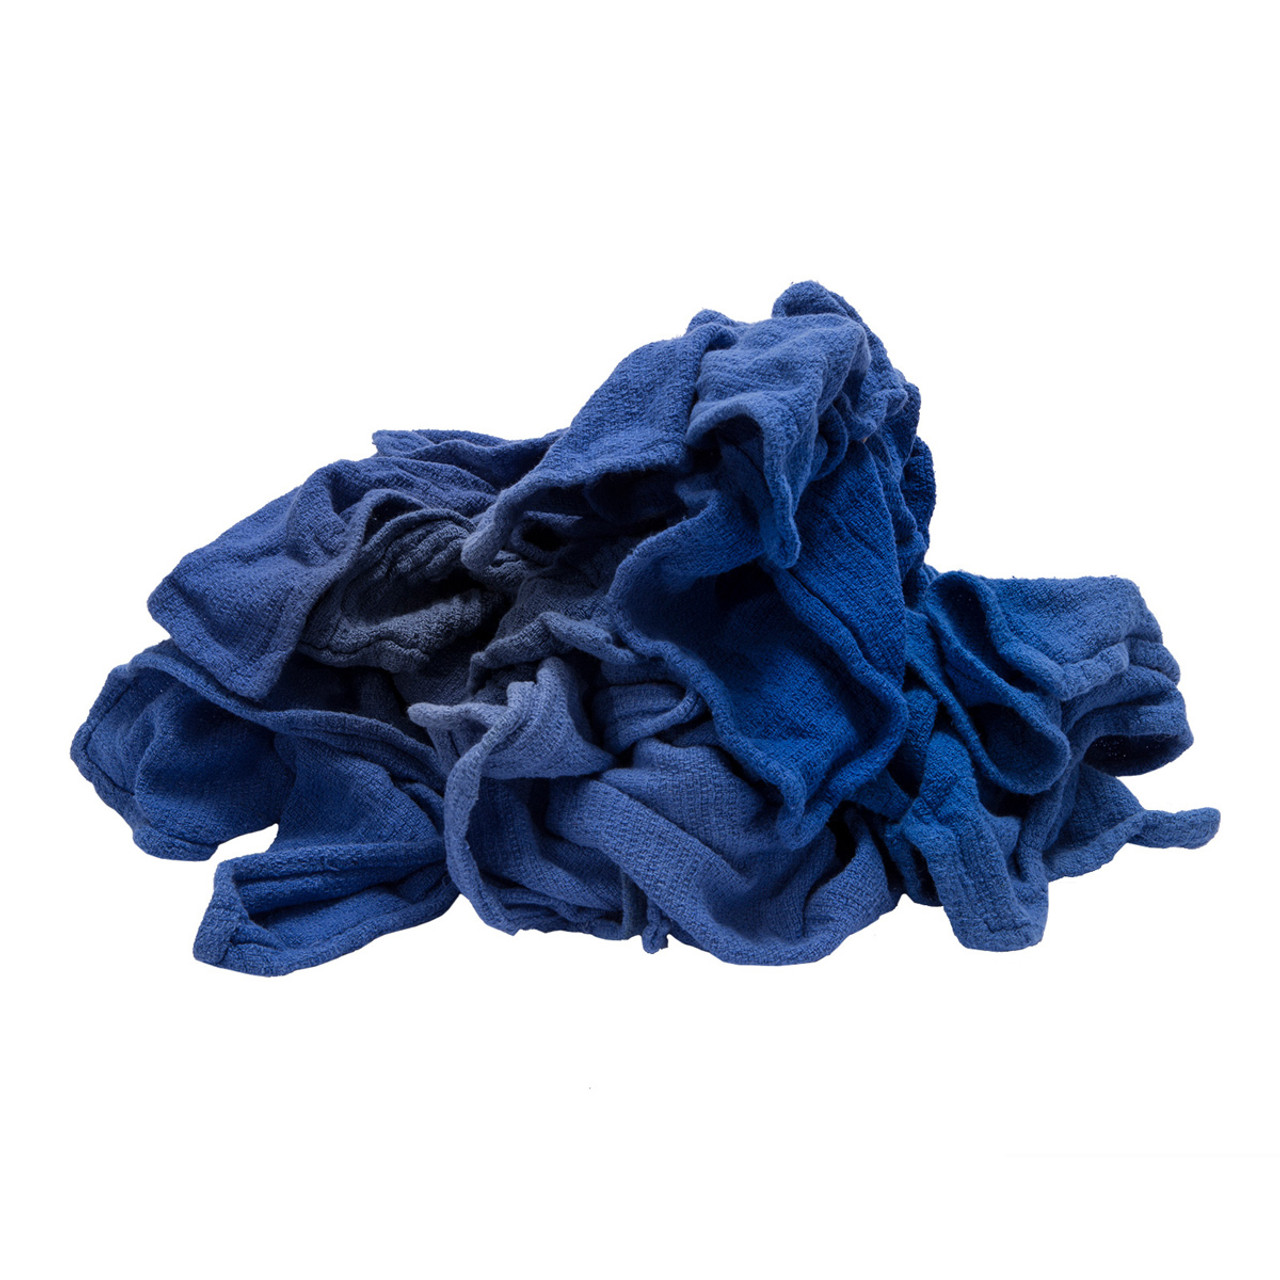 BLUE RECYCLE HUCK TOWEL 
COTTON-50LB